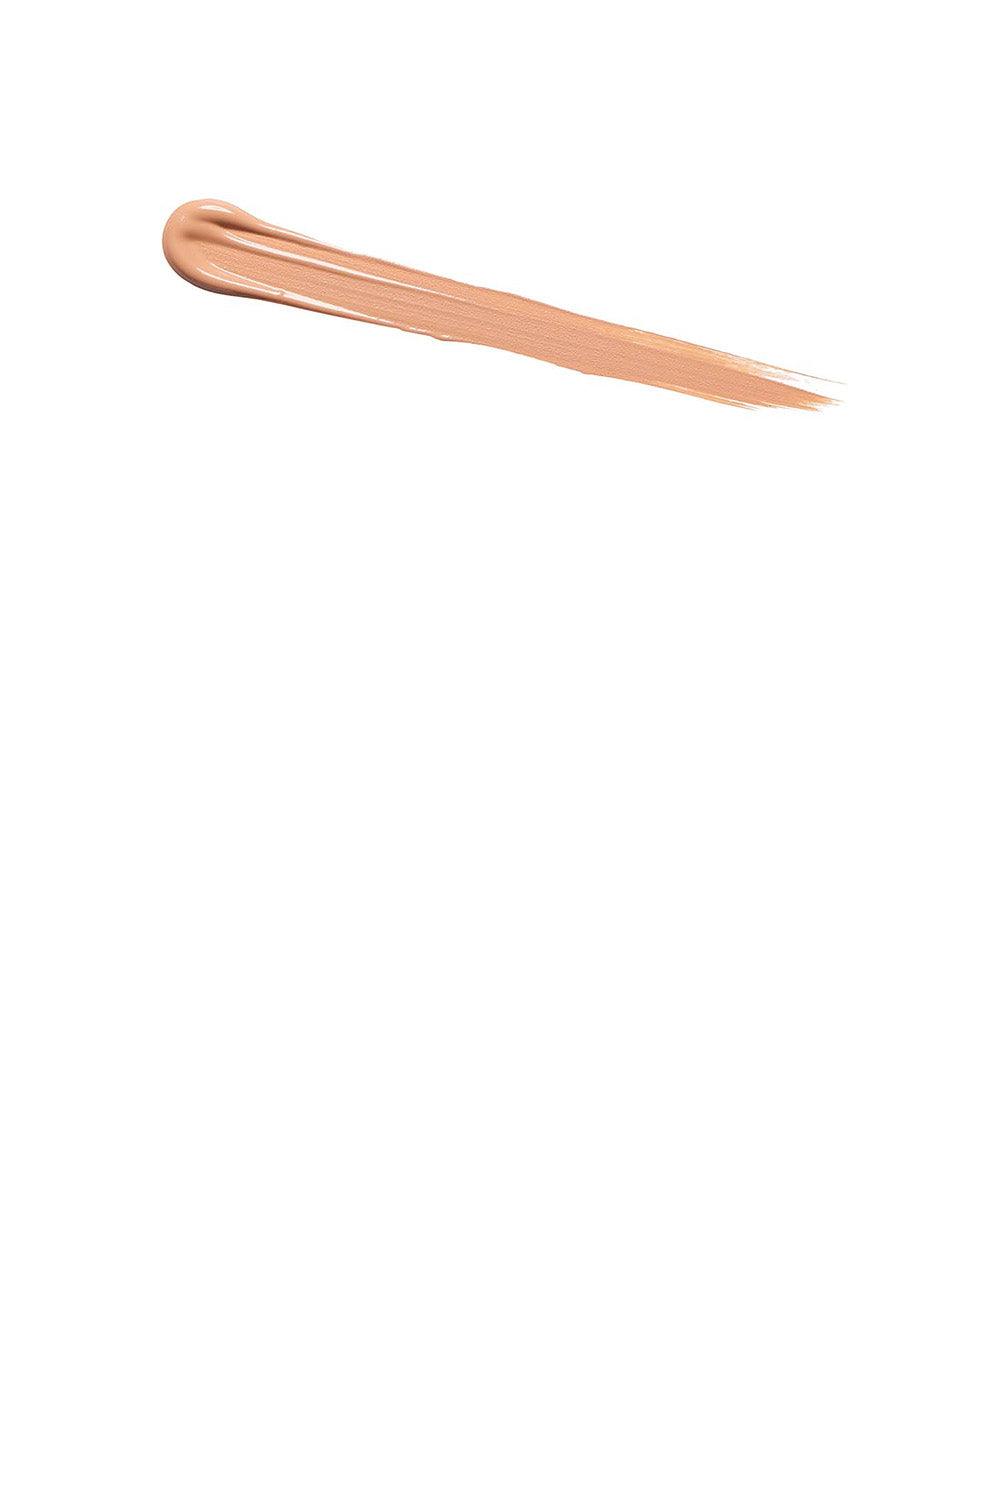 Yves Saint Laurent - קונסילר טוש אקלה Touch Eclat High Cover לכיסוי גבוה ומראה זוהר 2.5 מ"ל - MASHBIR//365